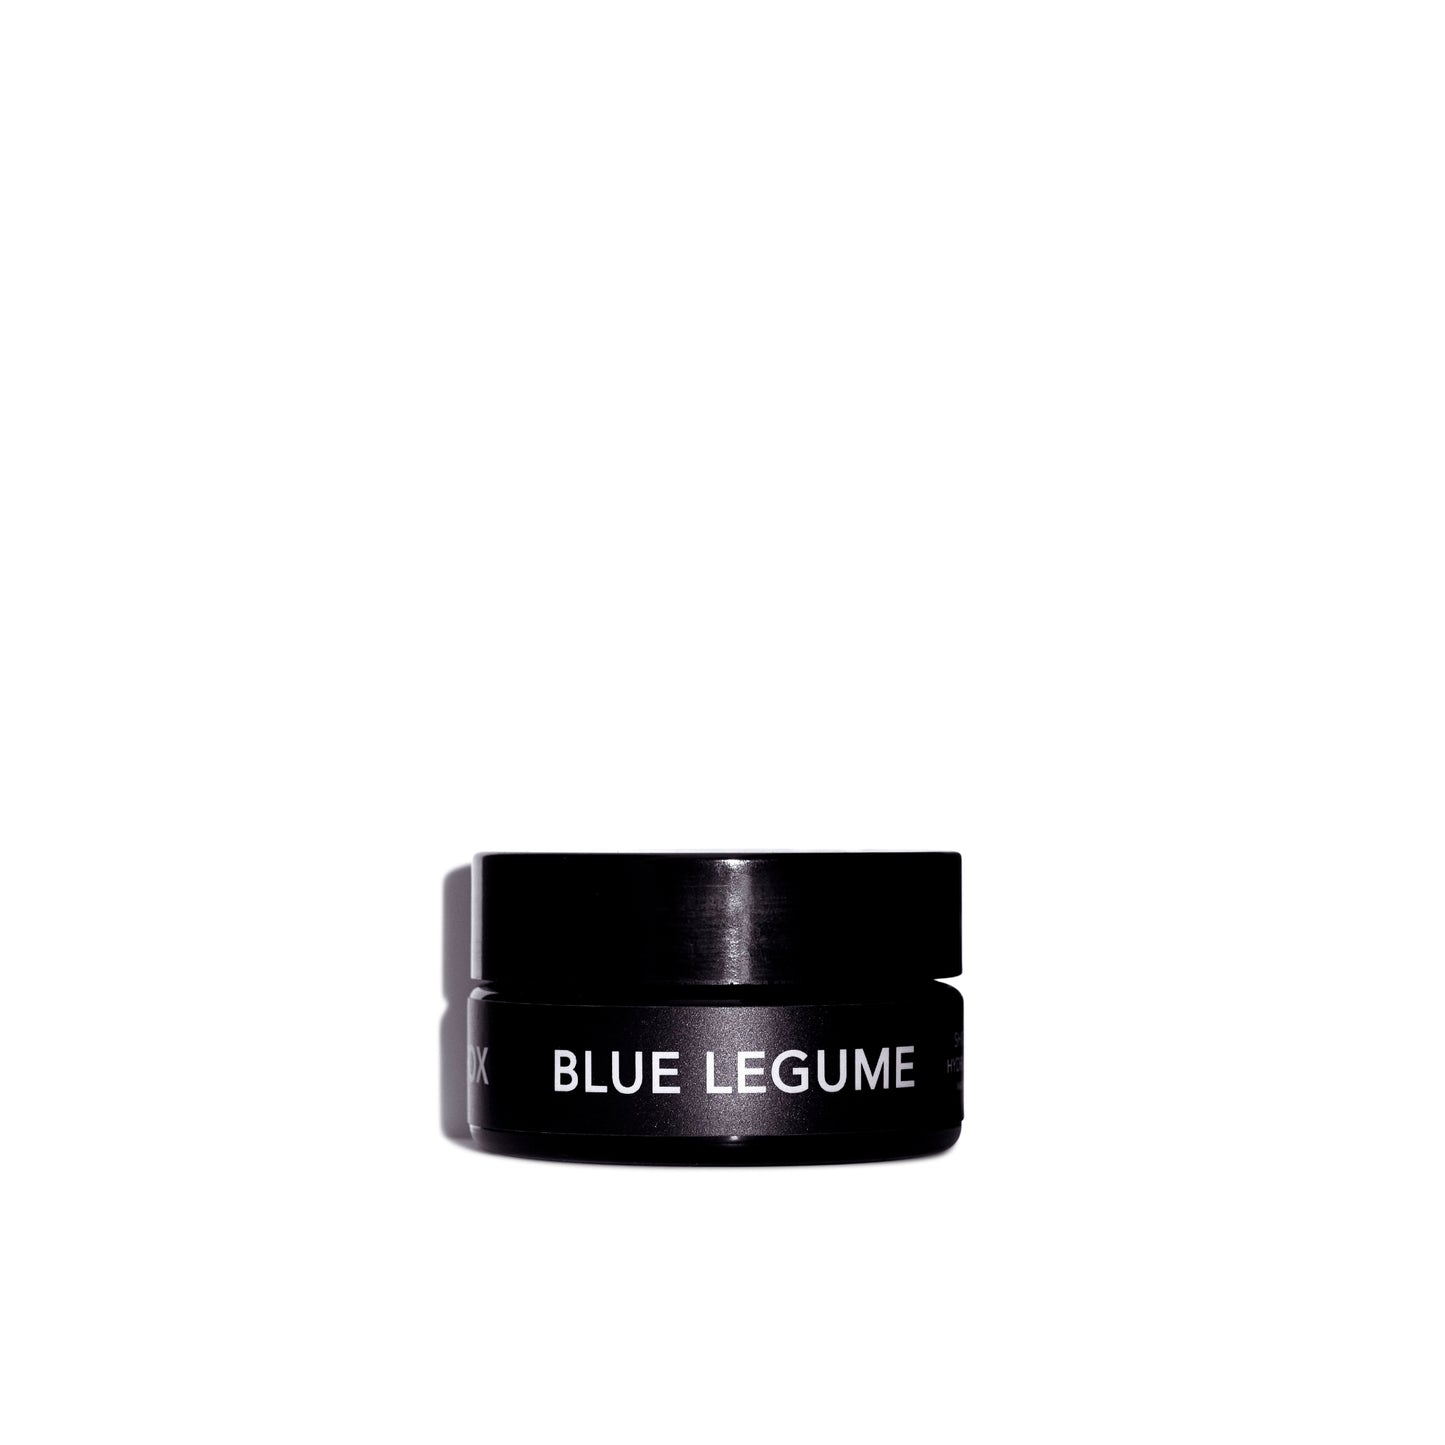 LILFOX BLUE LEGUME Hydra-Soothe Mask new packaging